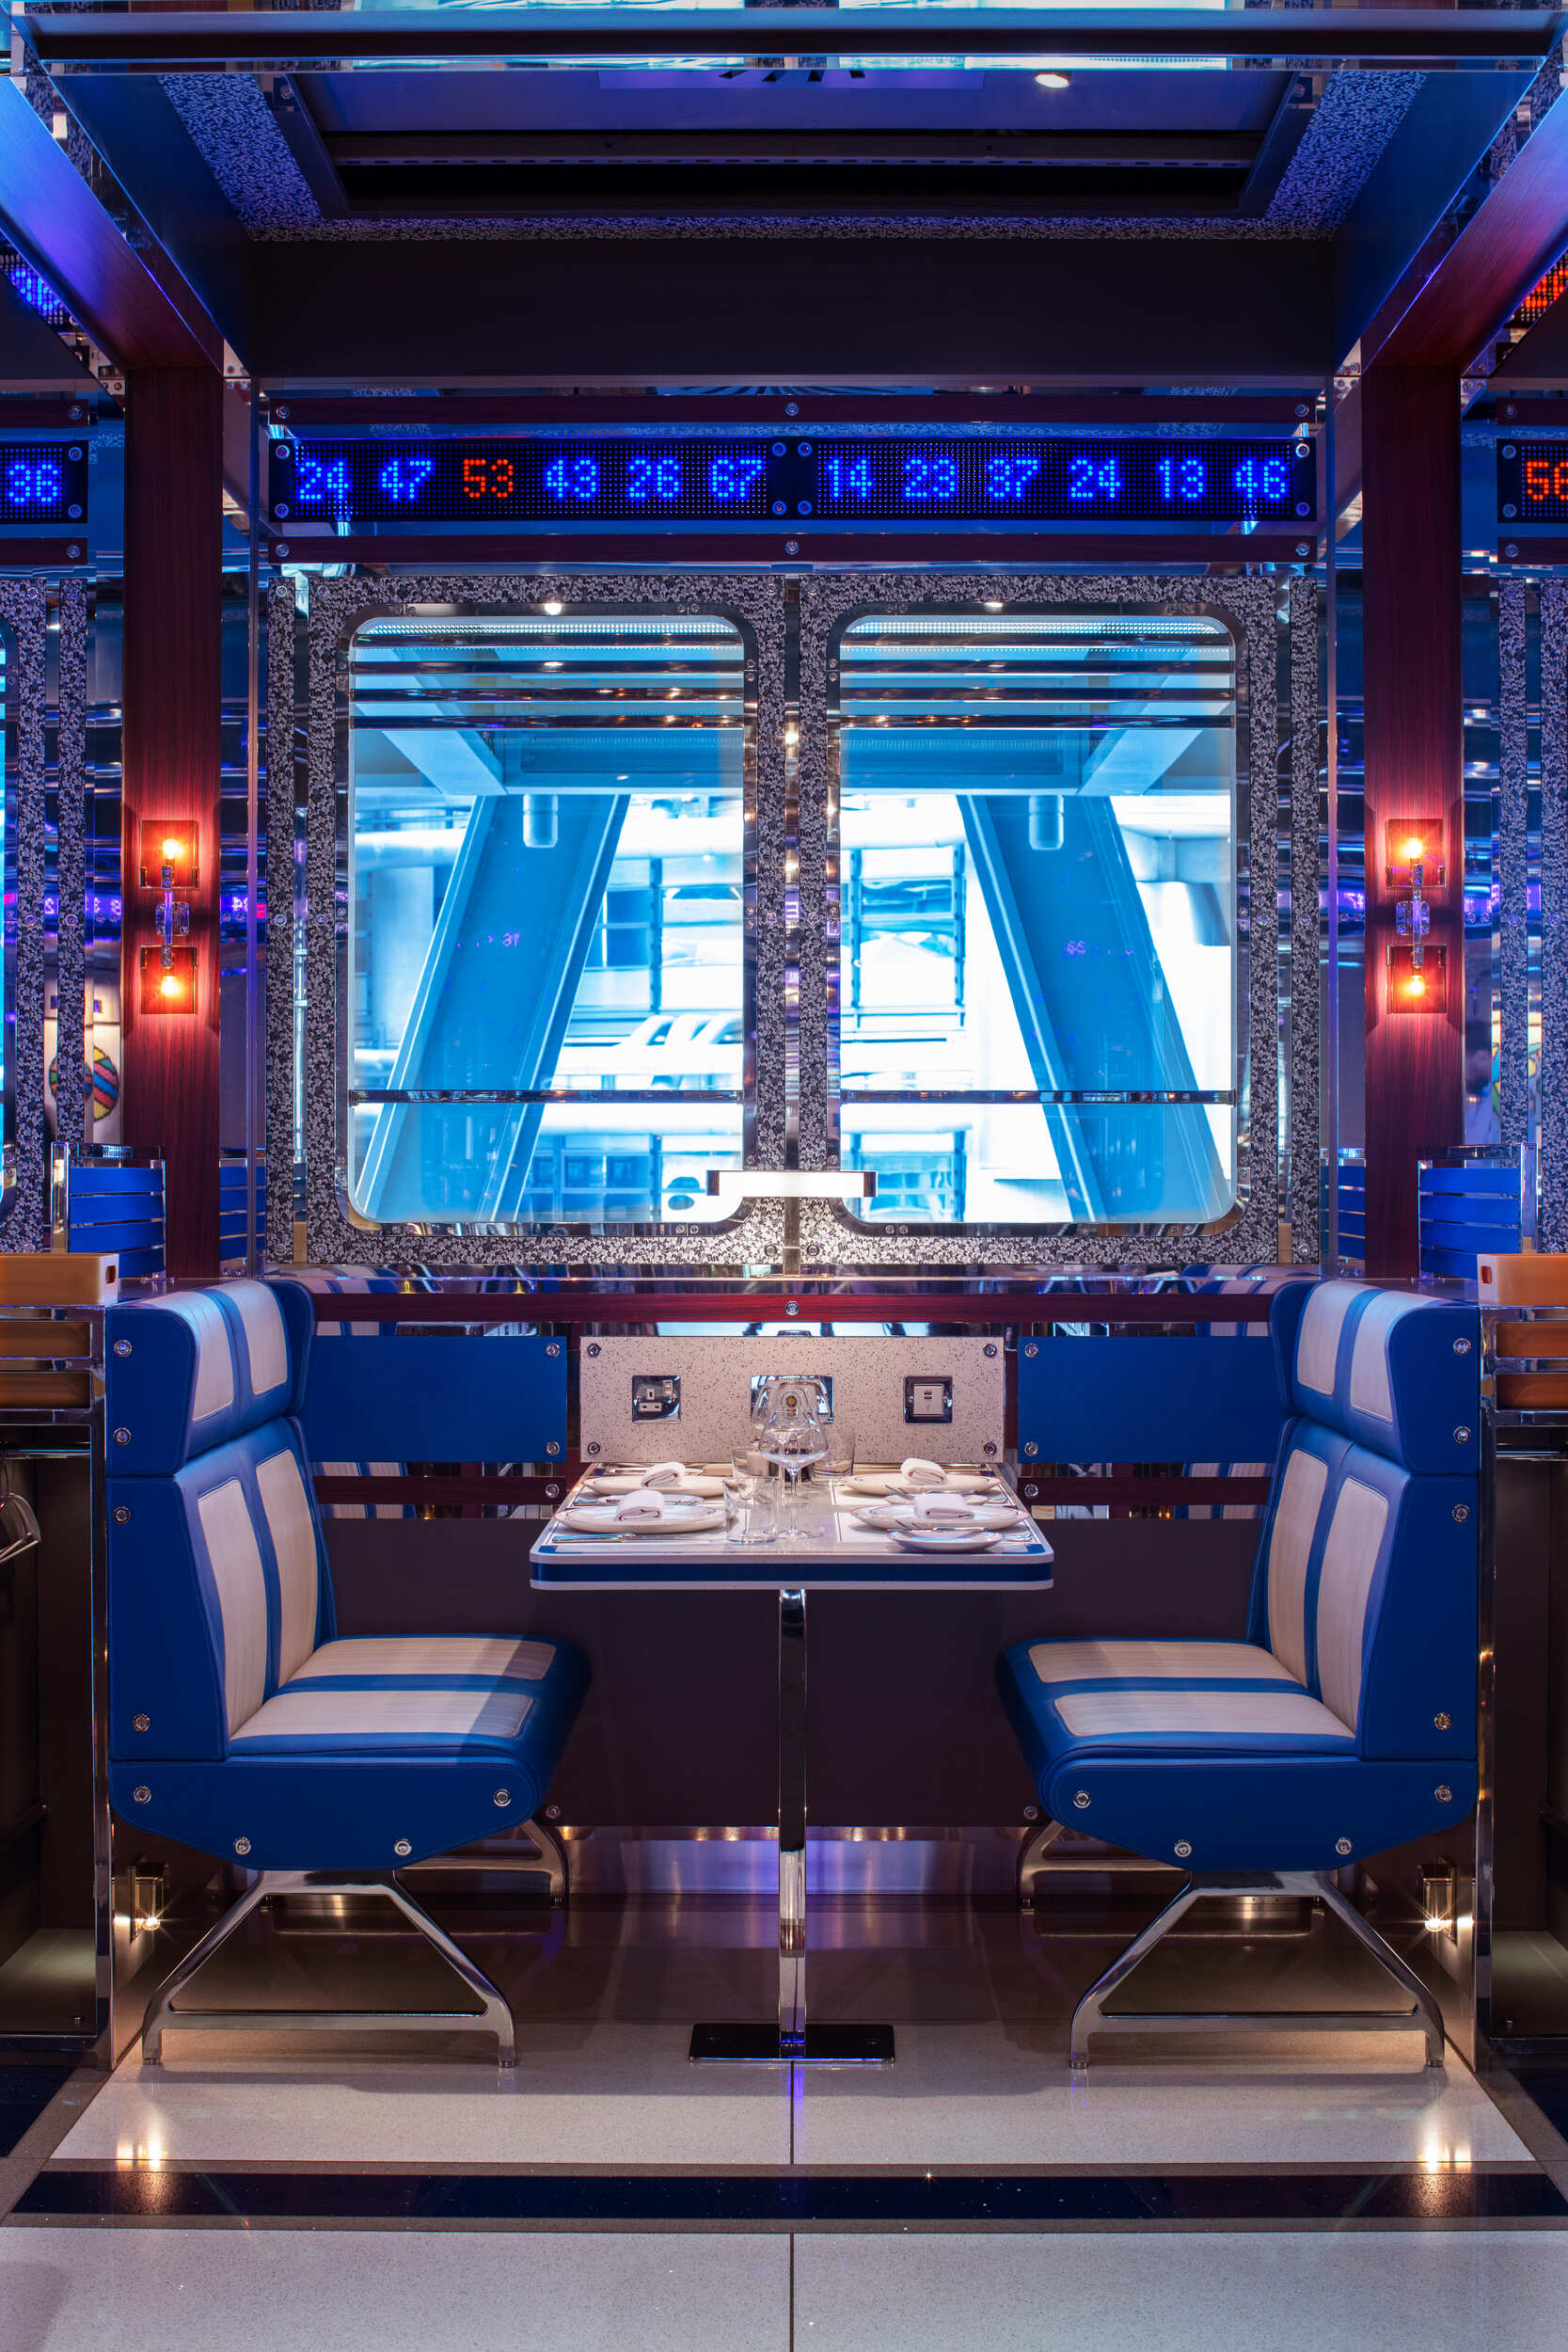 Diner style retro blue seating table & luminous lighting